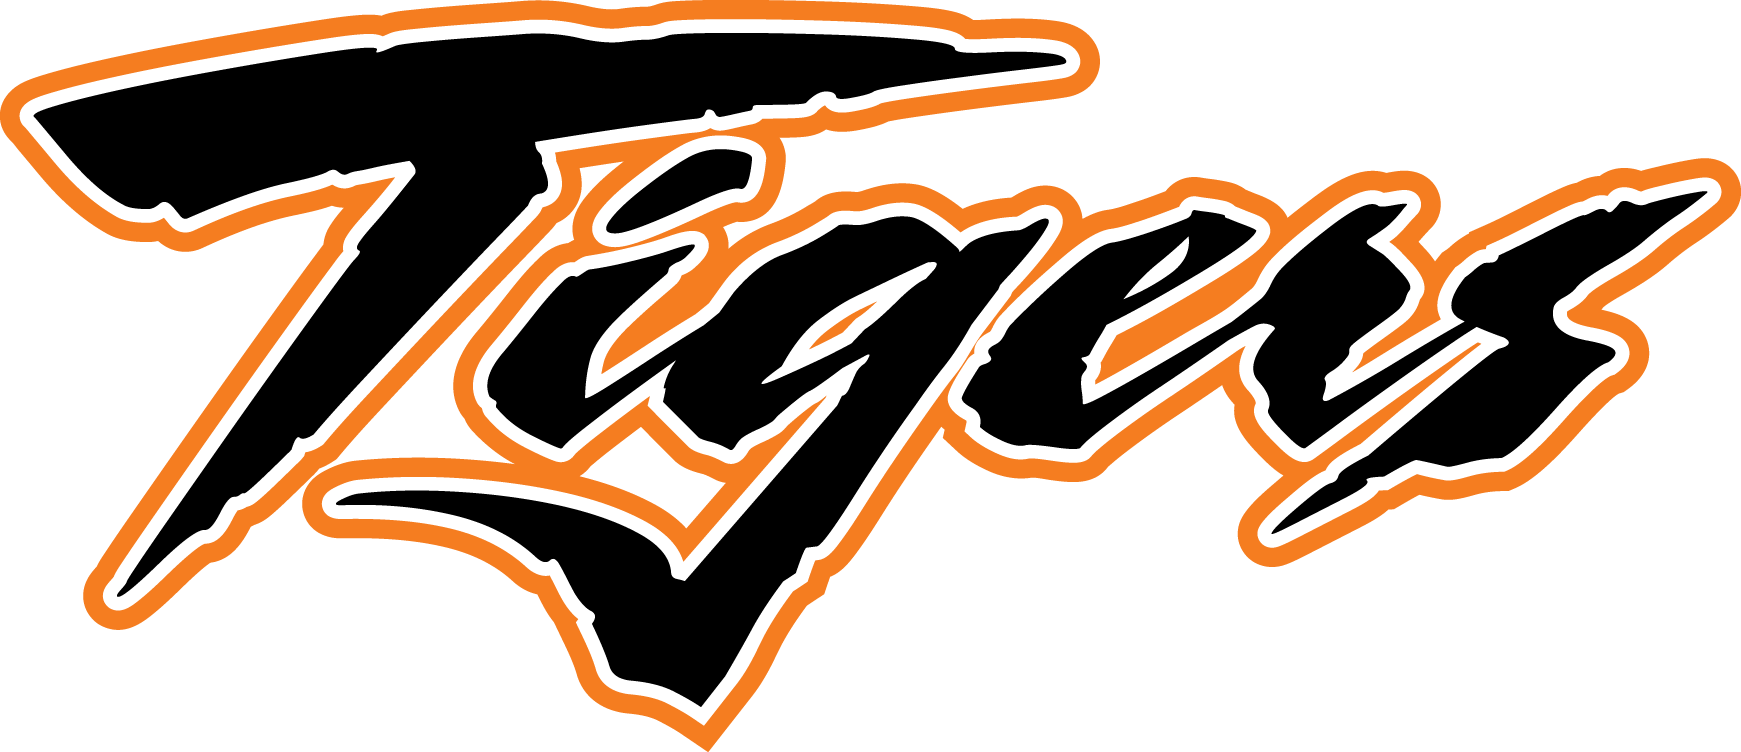 Tigers Logo - Logos - Princeton School District 477